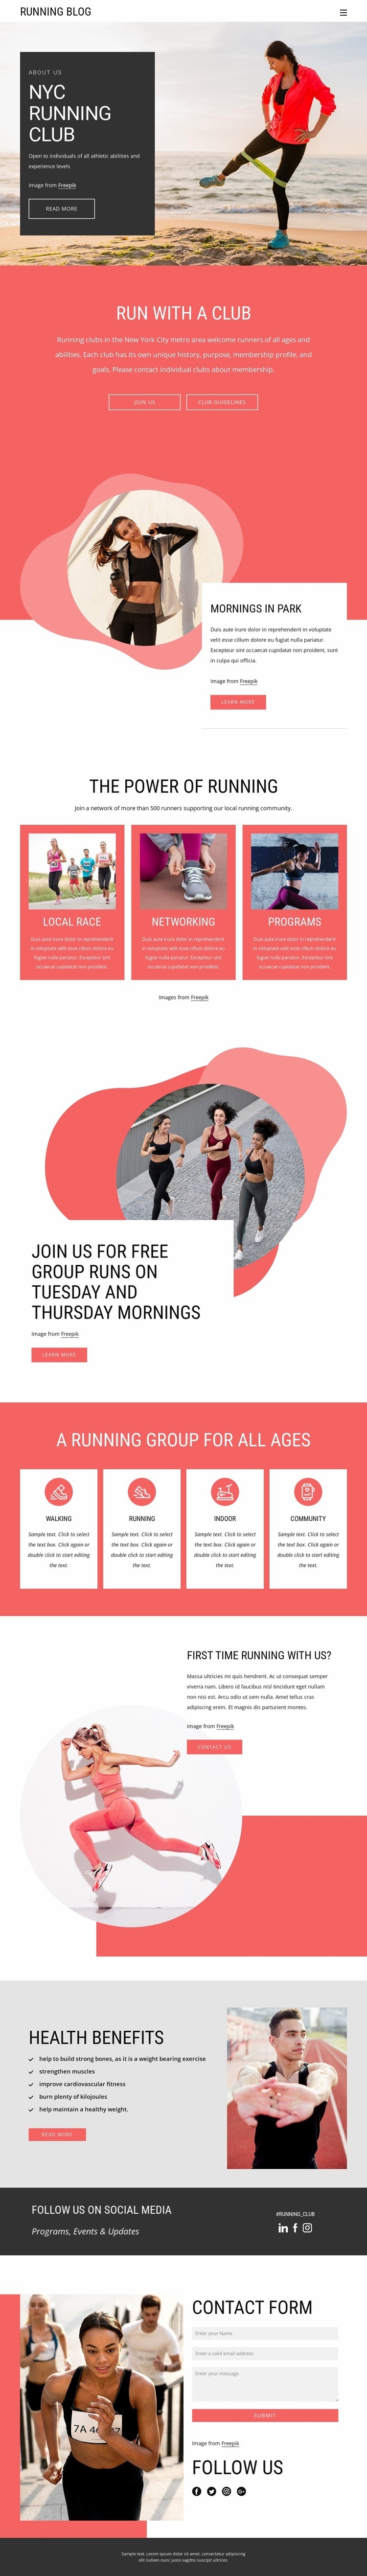 NYC running club Homepage Design